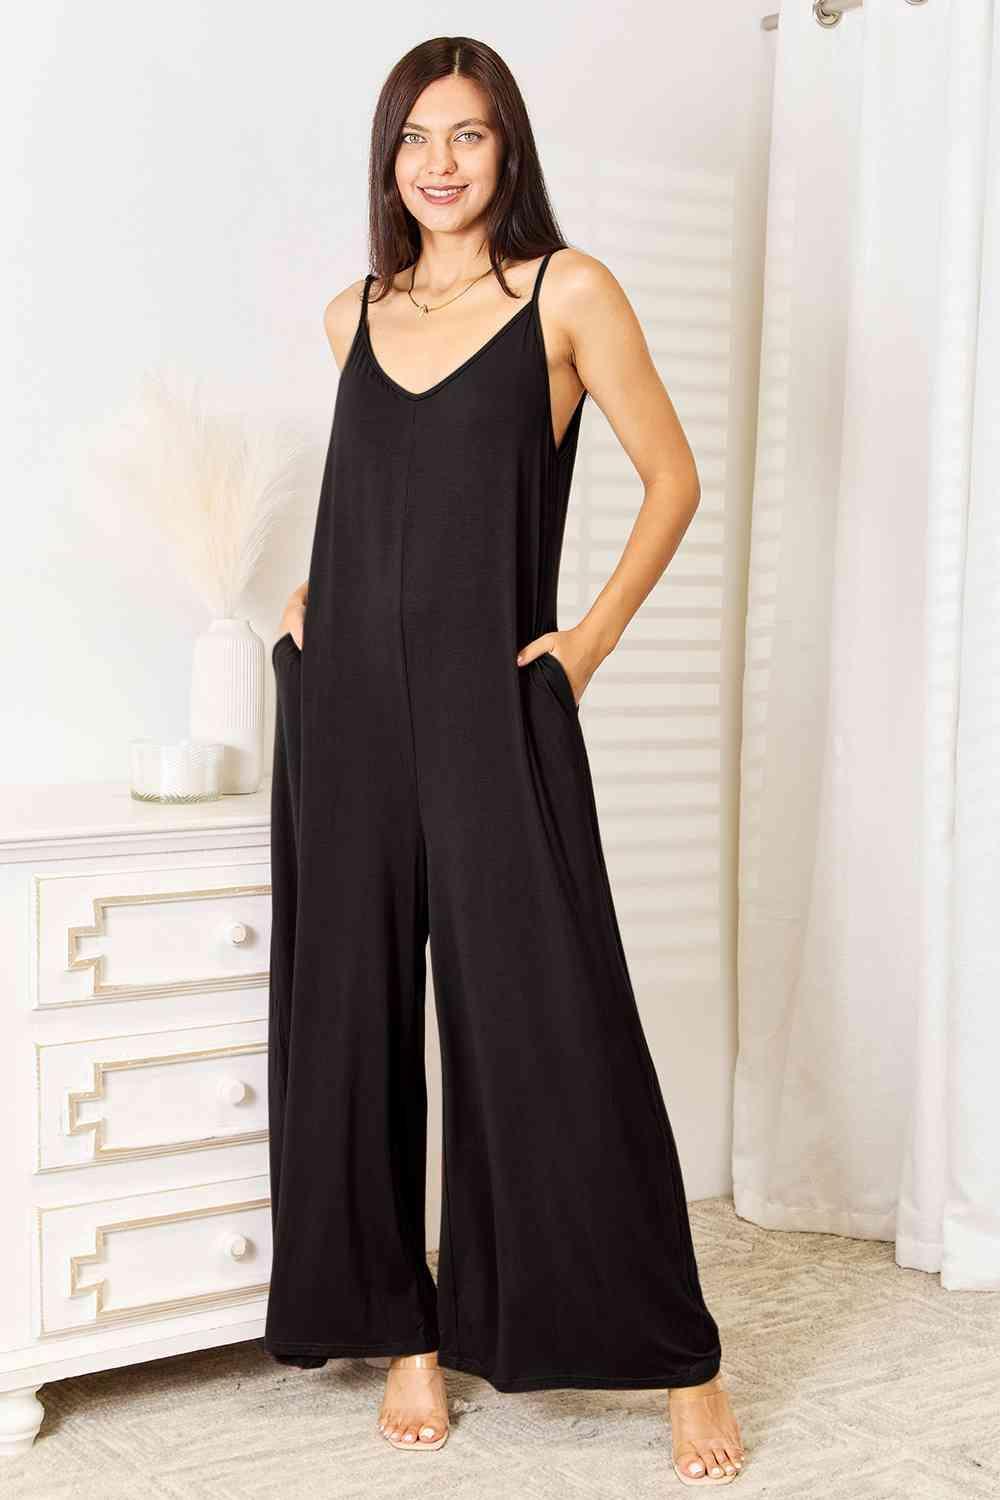 Bona Fide Fashion - Full Size Soft Rayon Spaghetti Strap Tied Wide Leg Jumpsuit - Women Fashion - Bona Fide Fashion